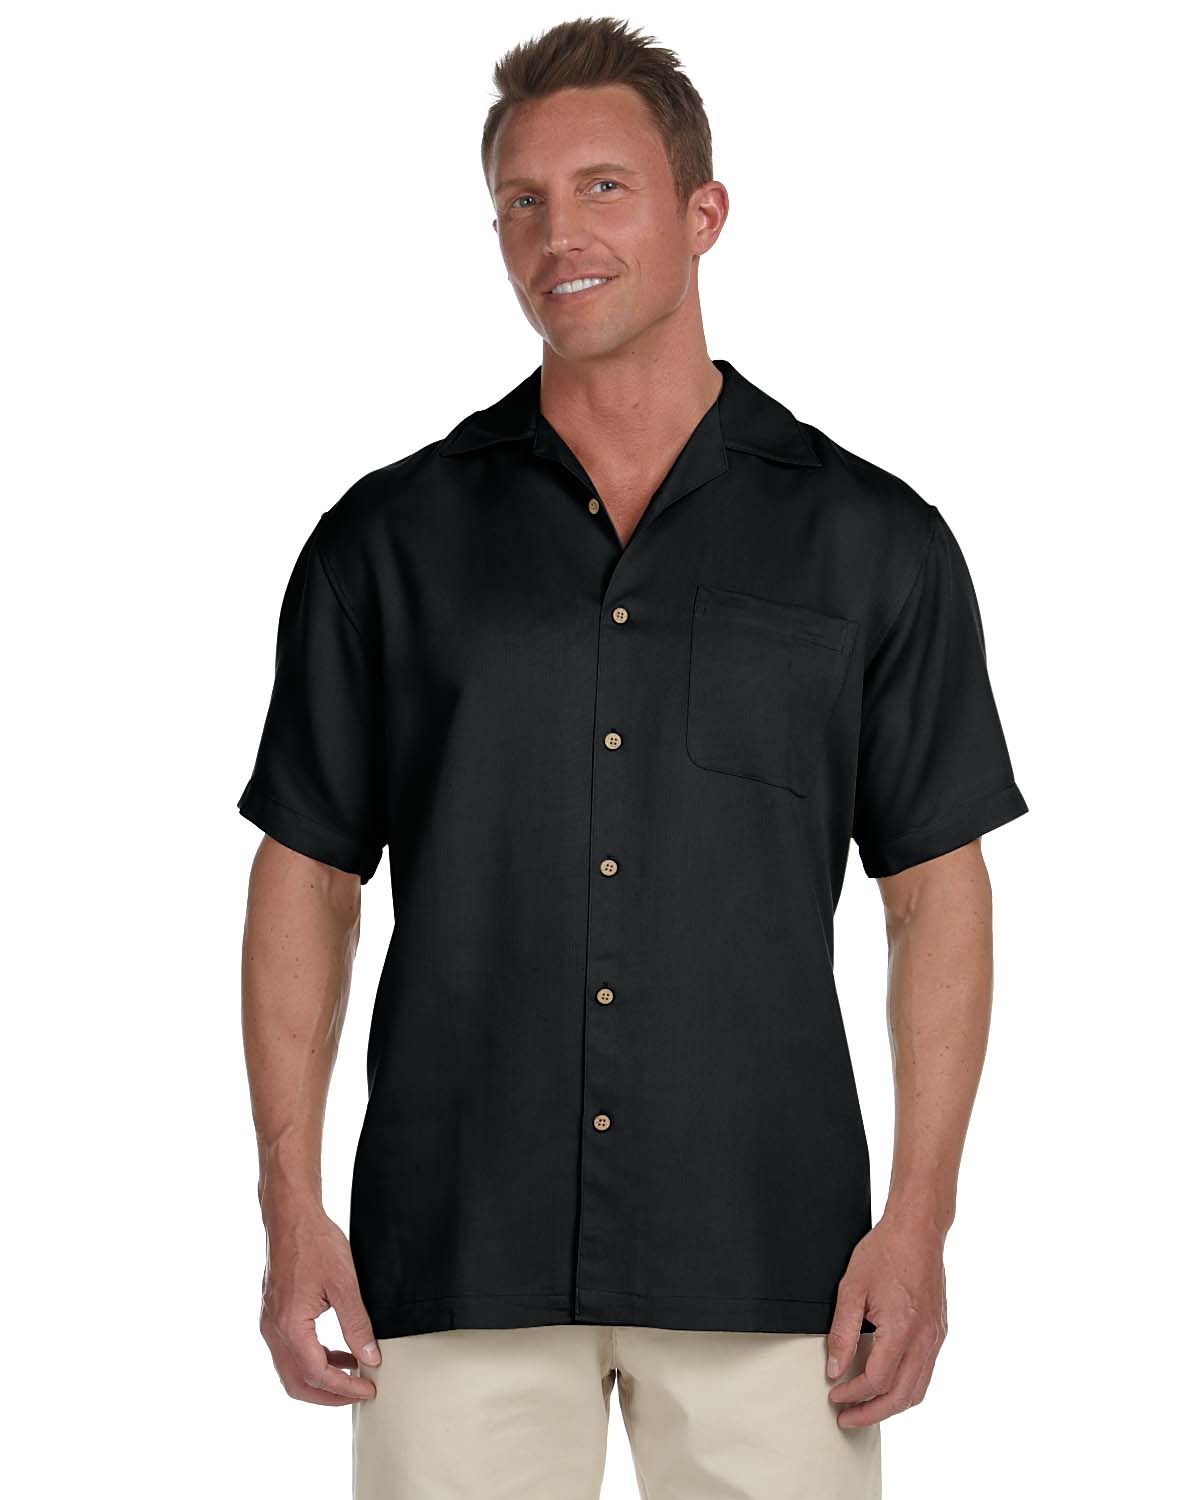 Harriton M570 Men's Bahama Cord Camp Shirt $25.53 - Woven/Dress Shirts